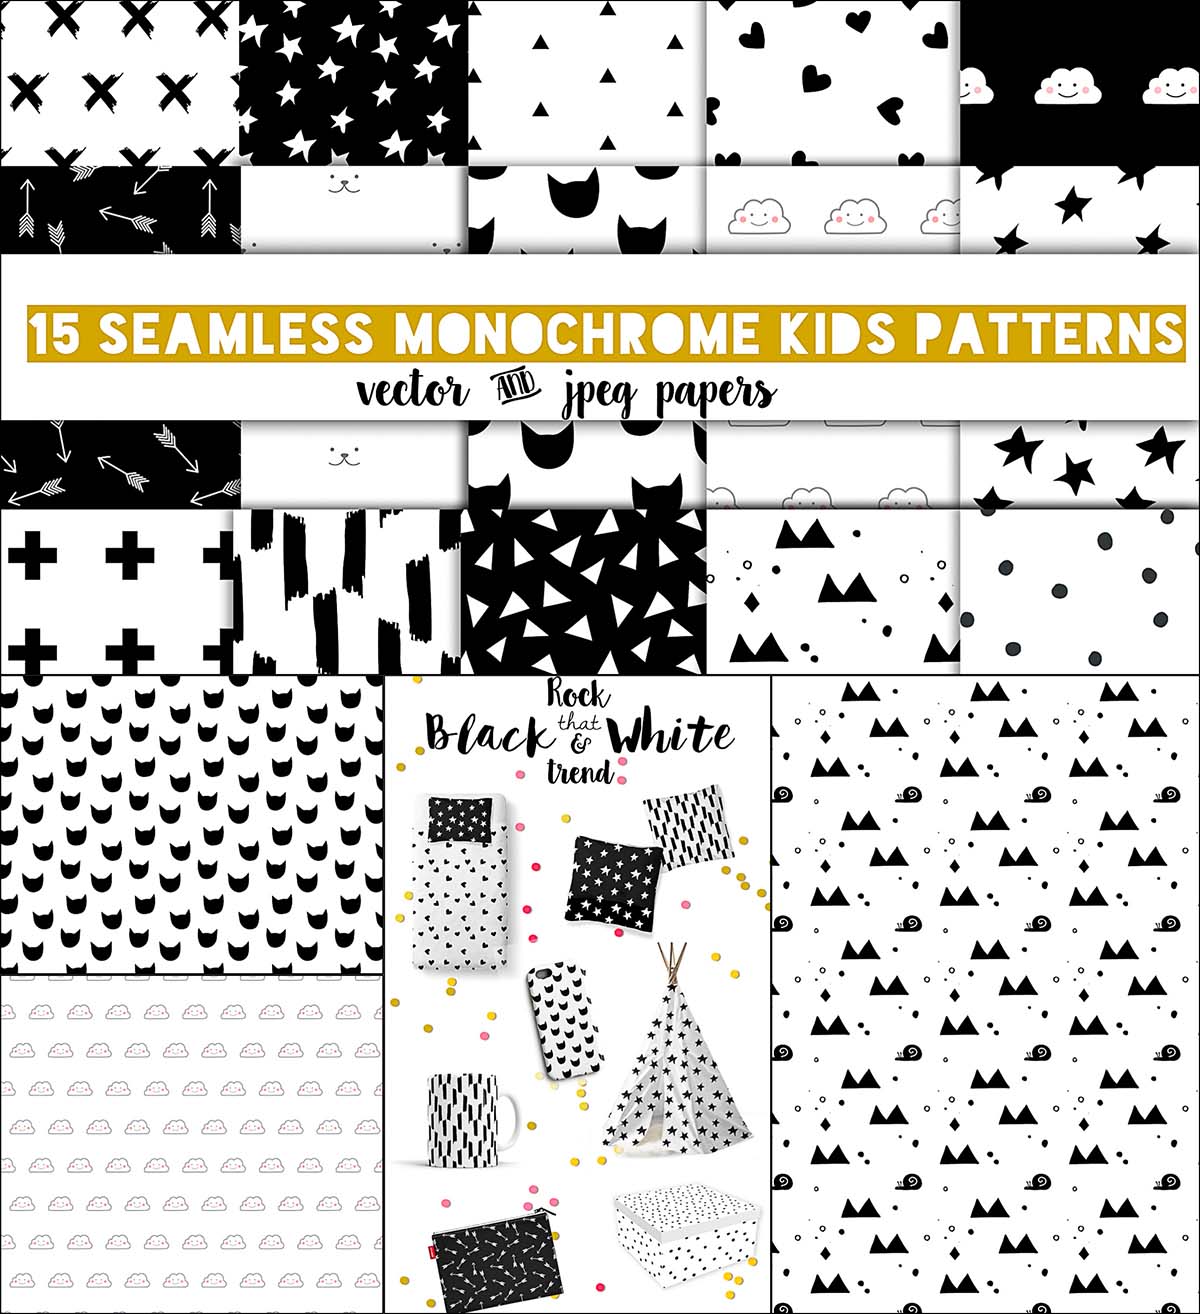 16 monochrome kids pattern